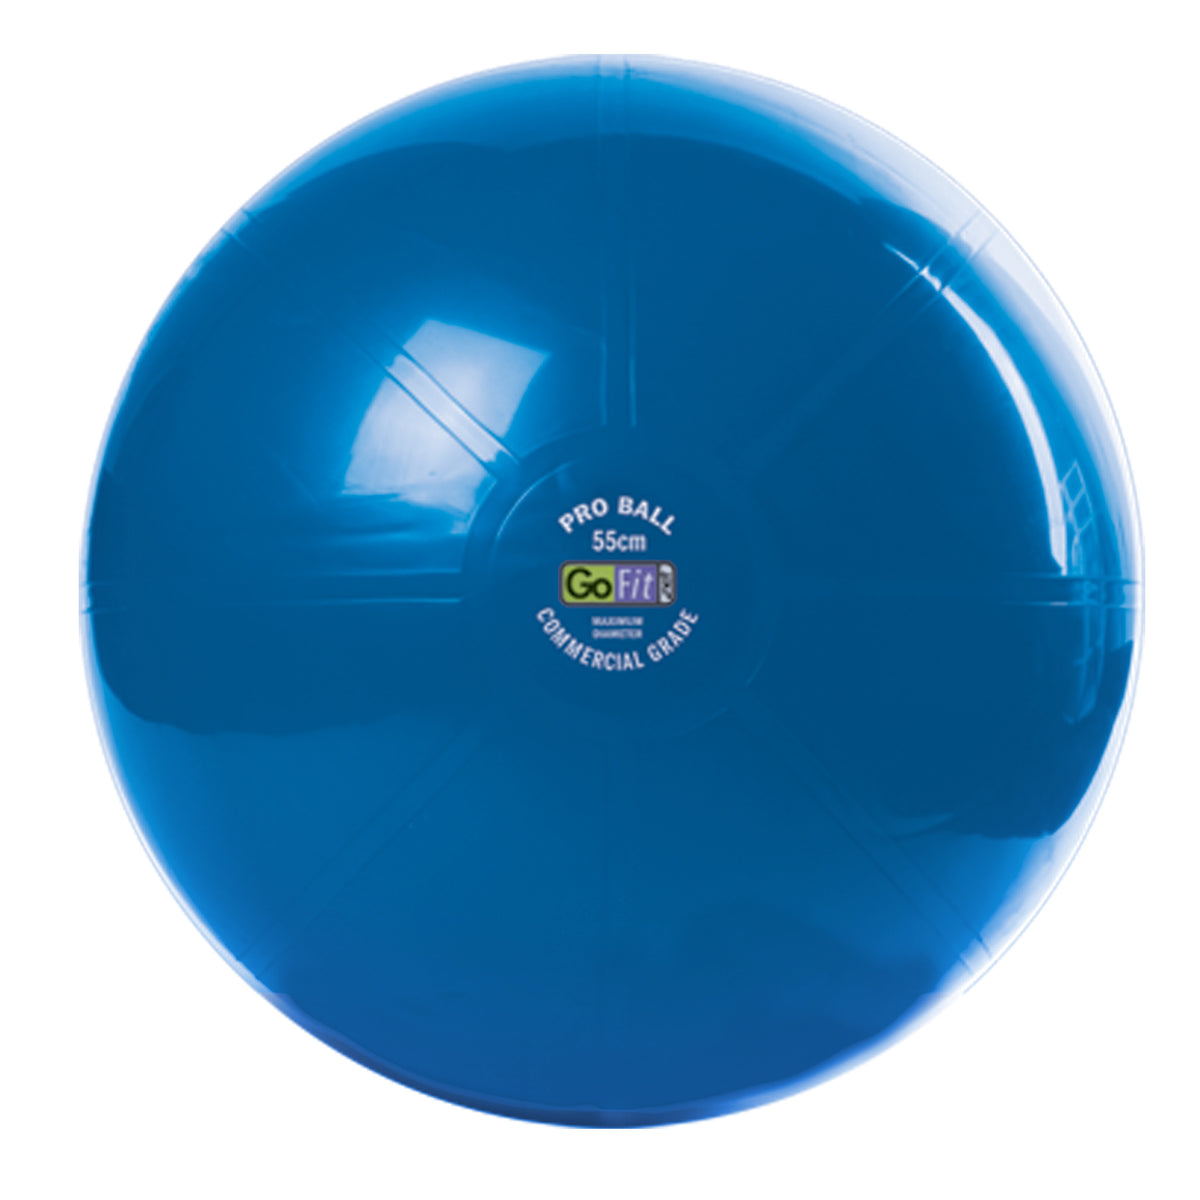 Super Ball Commercial Grade Stability Ball Gofit Net